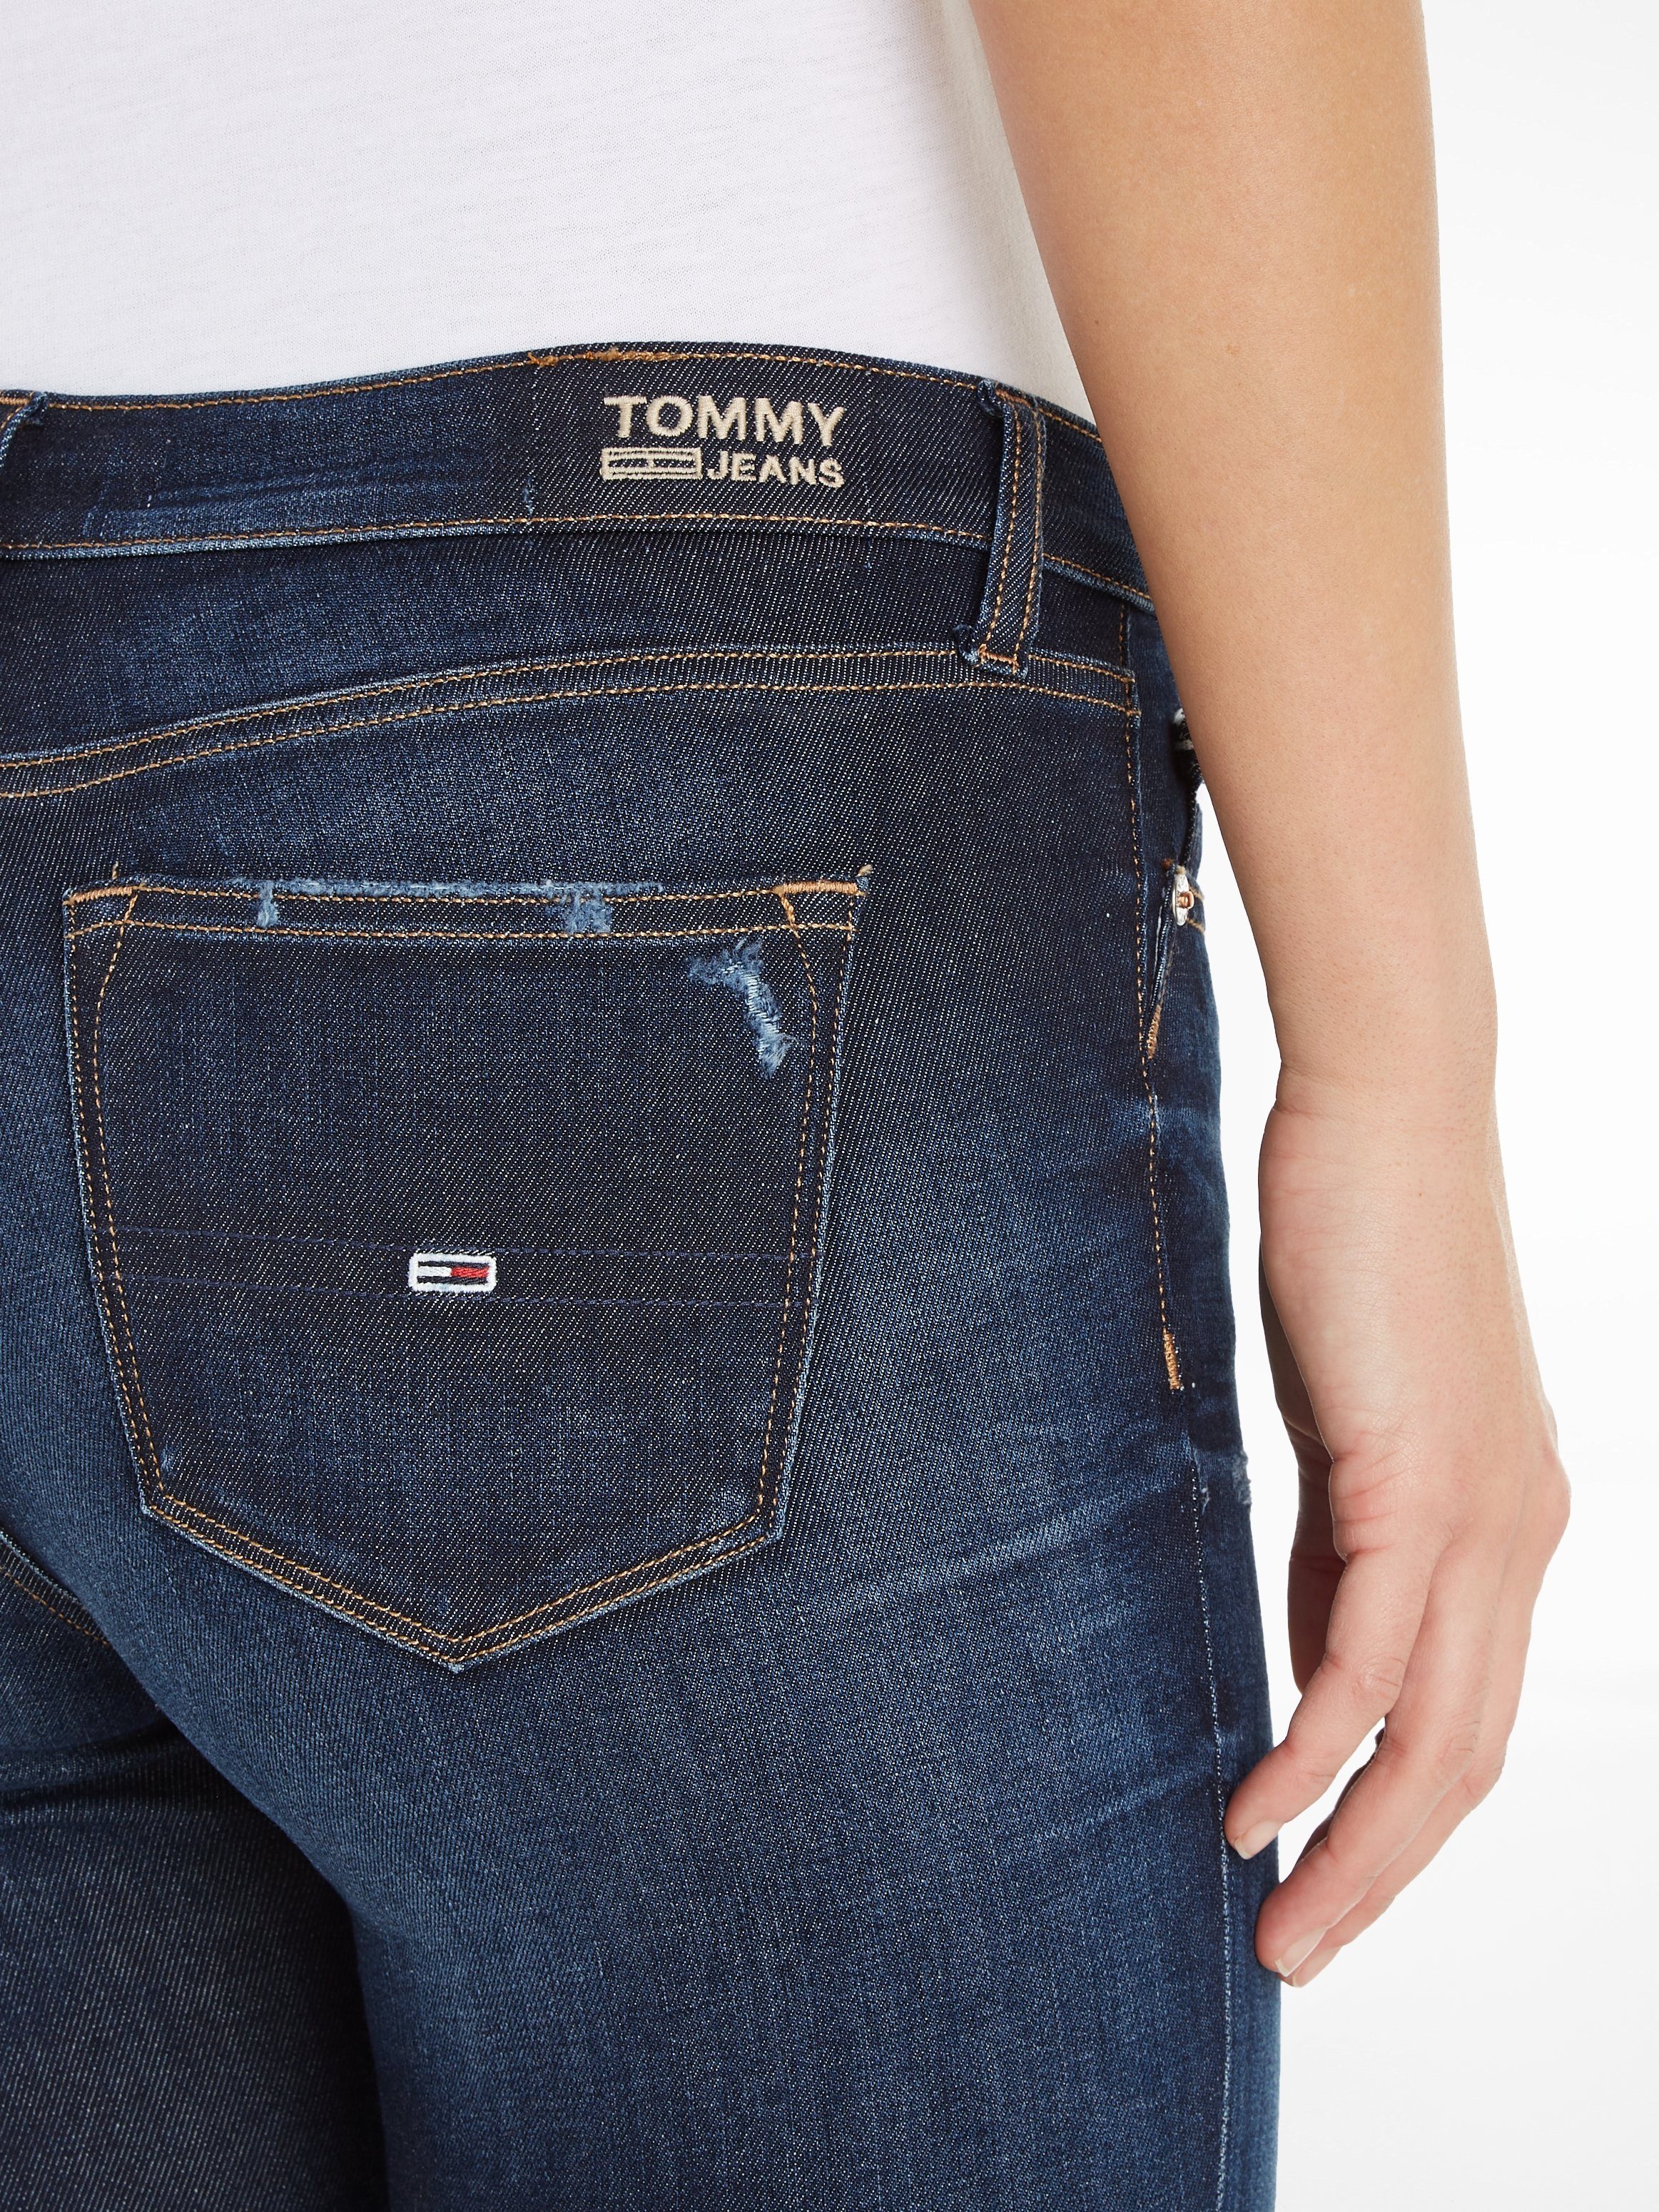 Denim_dark Jeans Markenlabel Tommy Tommy Jeans mit Skinny-fit-Jeans